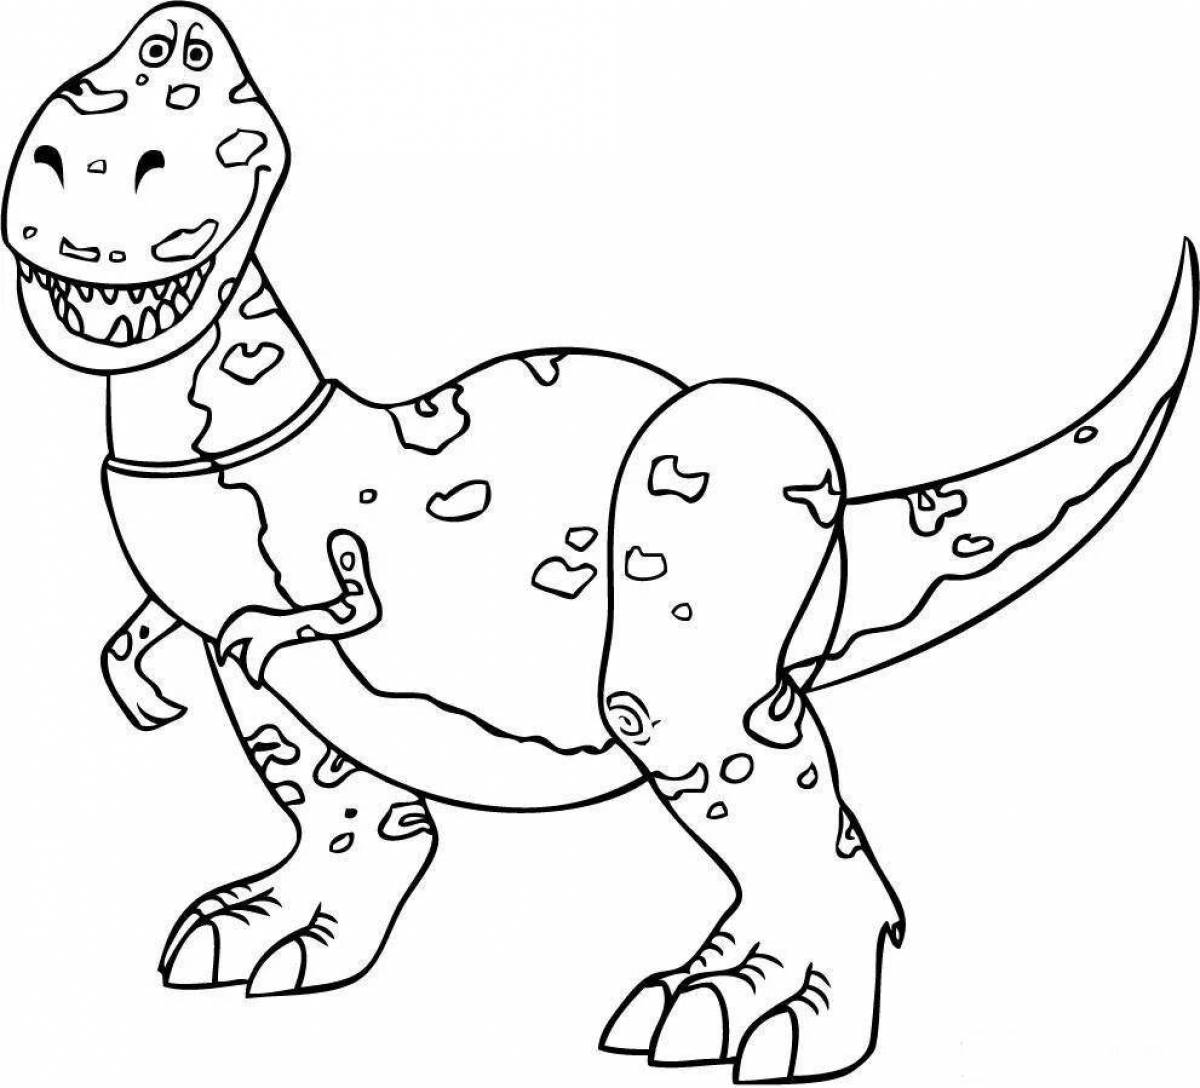 Coloring page amazing trubosaurs